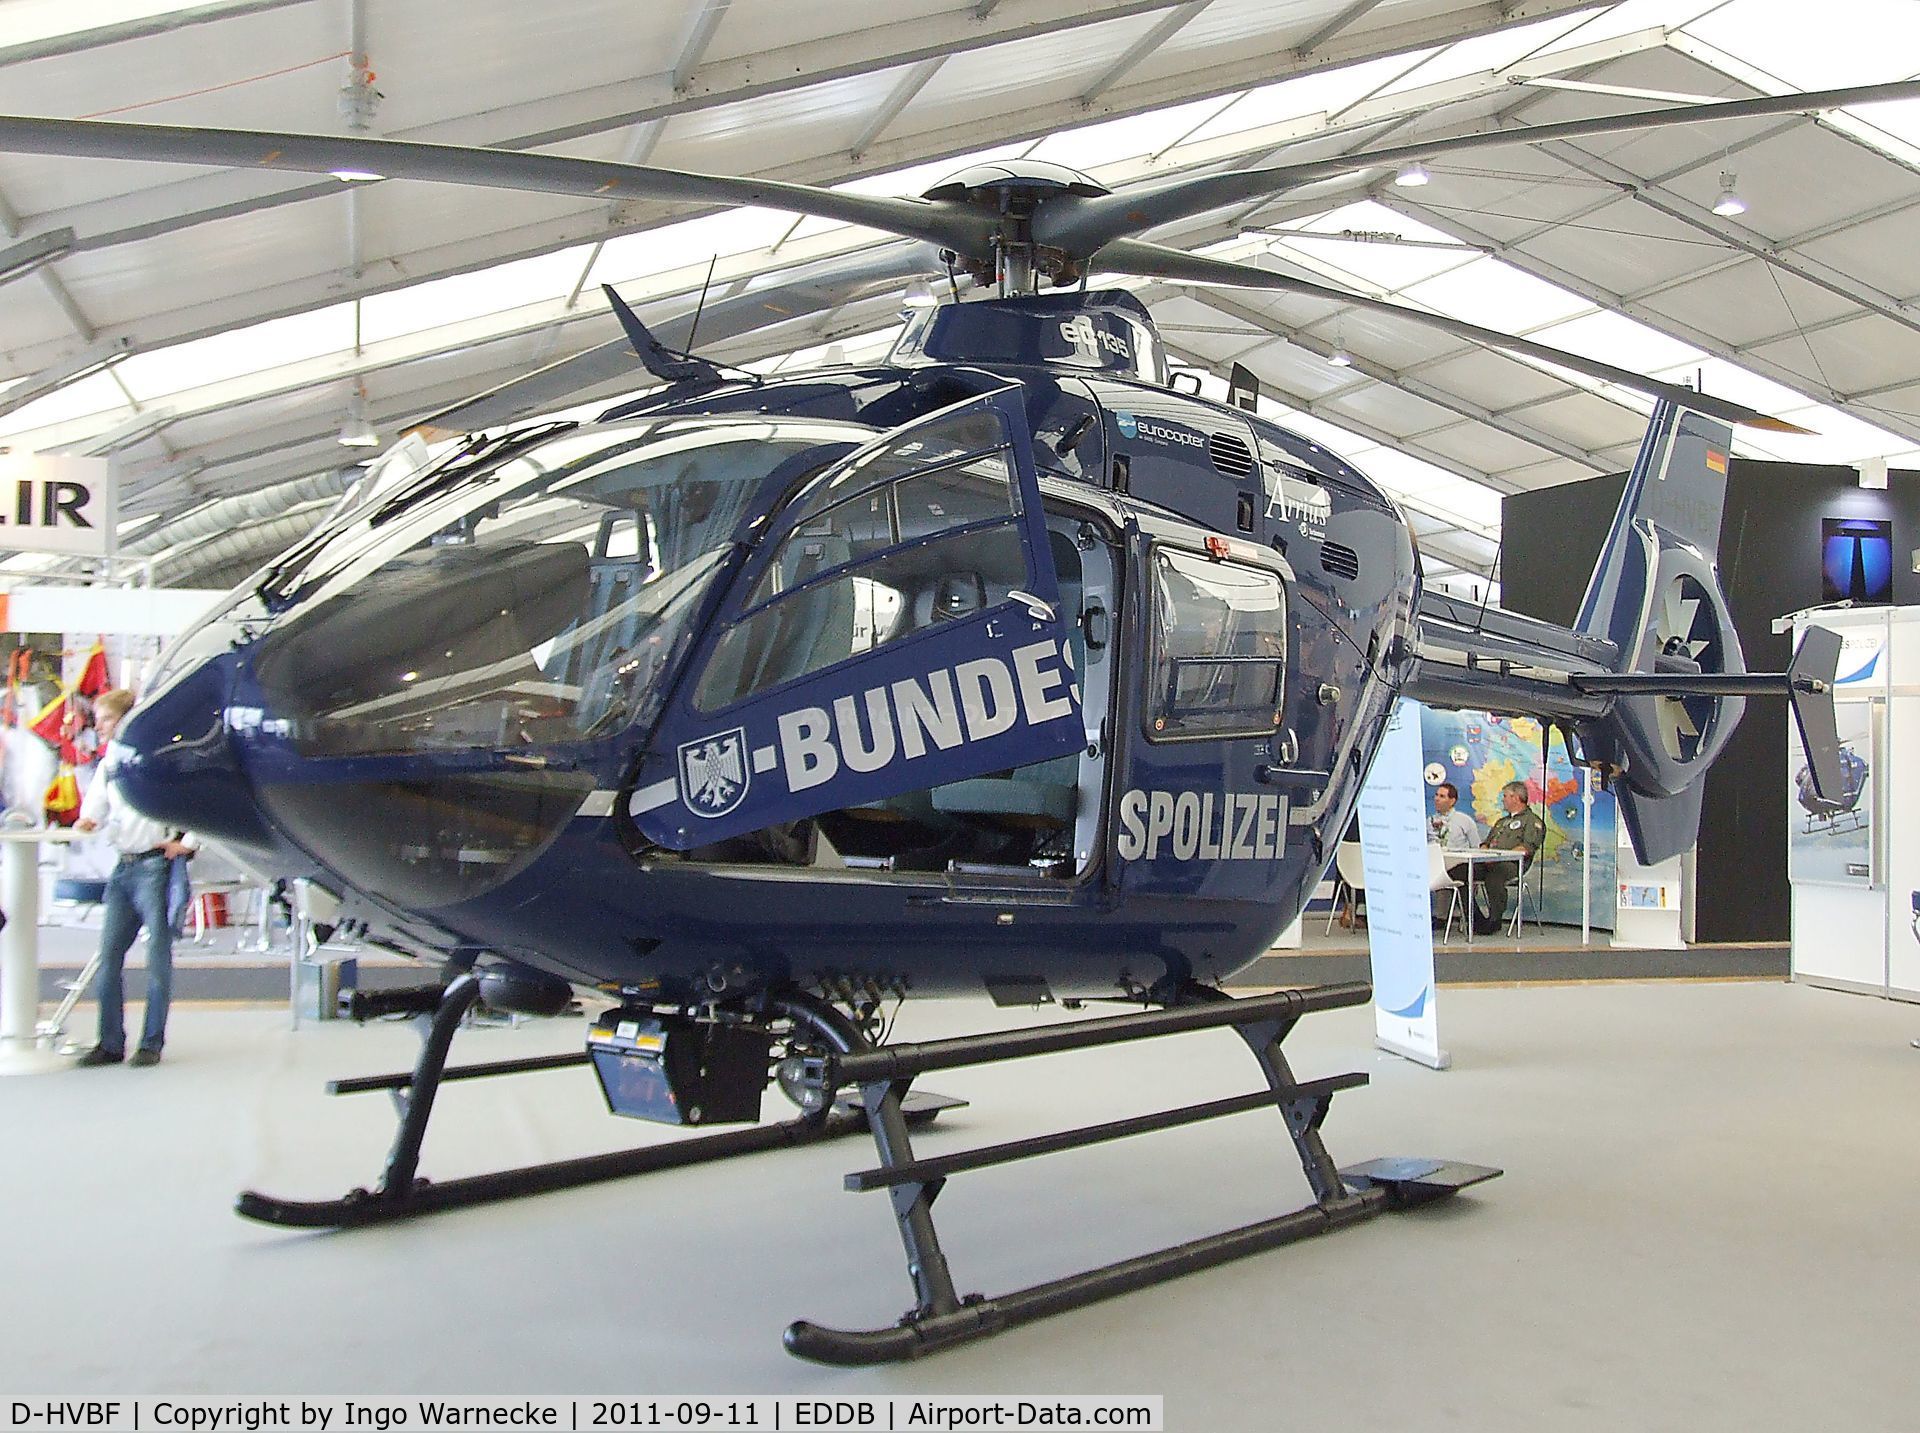 D-HVBF, Eurocopter EC-135T-2i C/N 0171, Eurocopter EC135T-2i of the German federal police(Bundespolizei) at the ILA 2012, Berlin